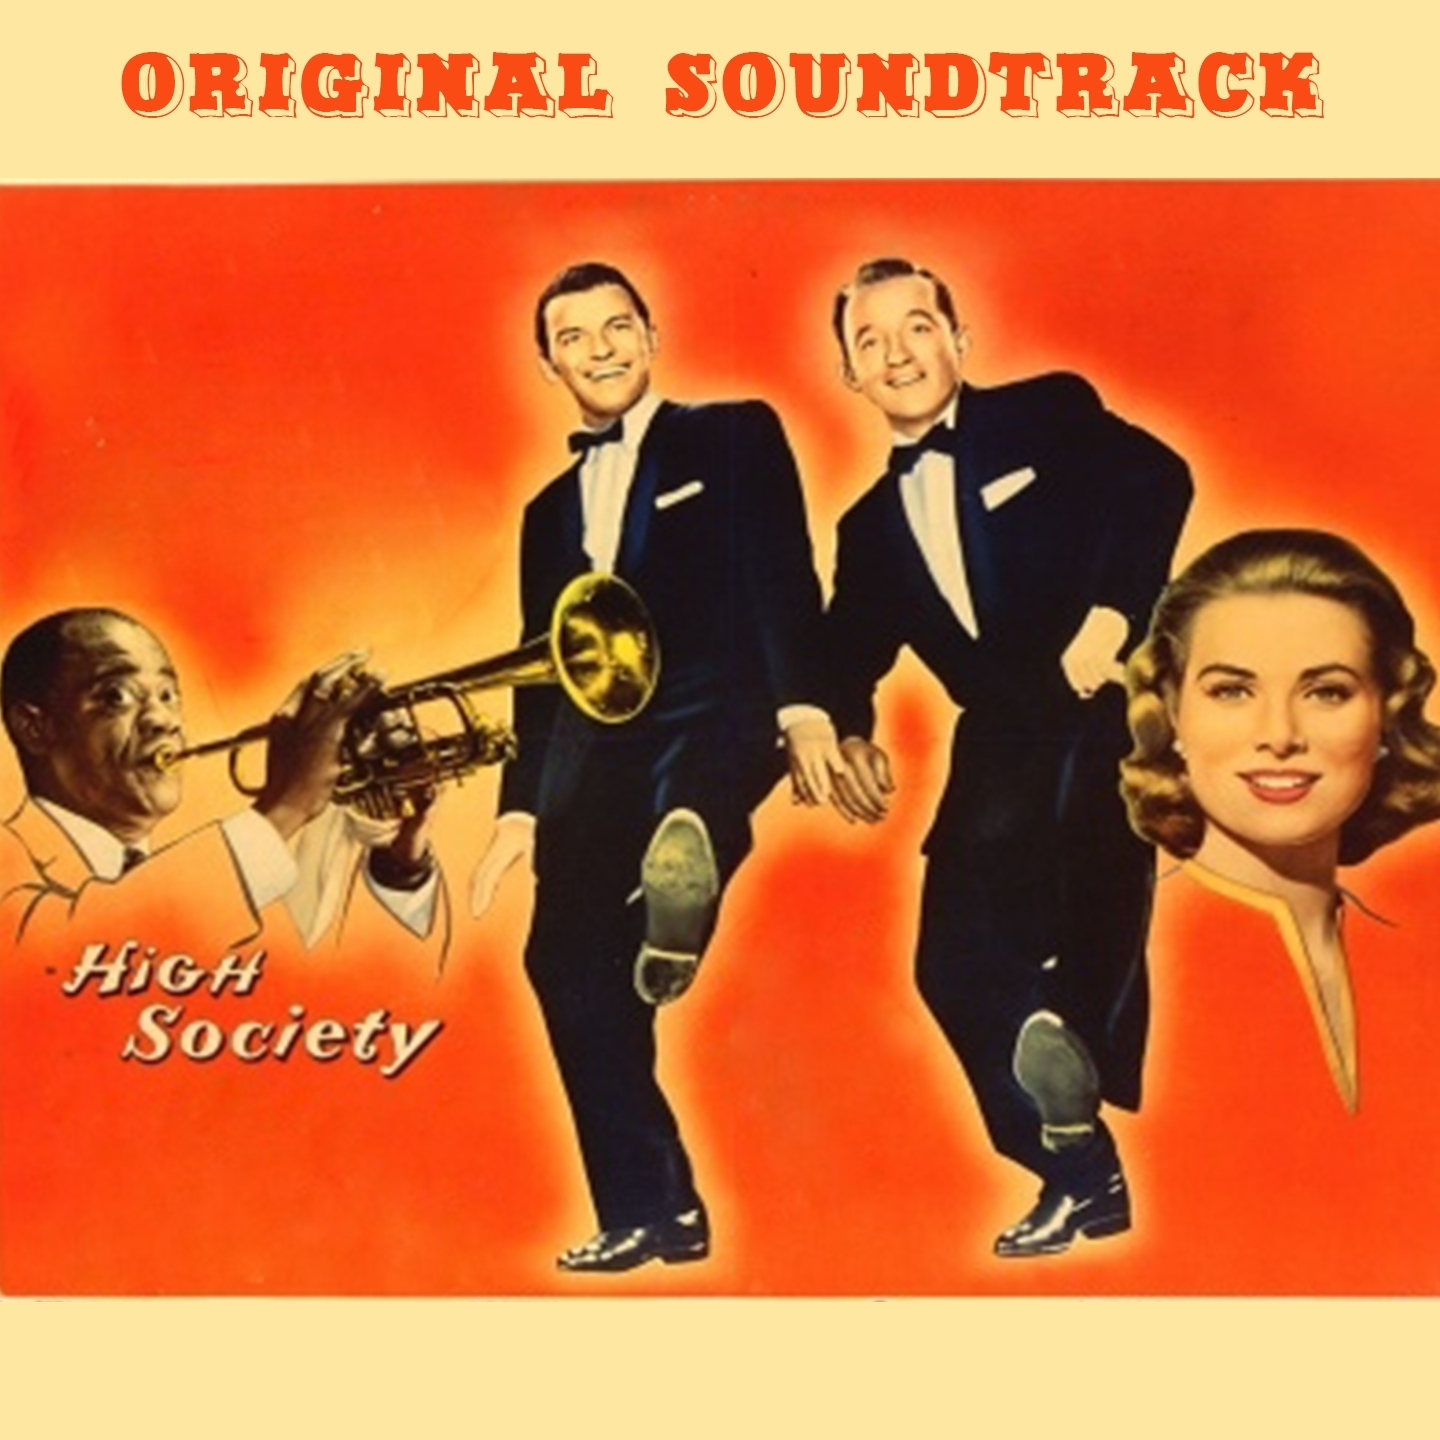 Now You Has Jazz ("High Society" Original Soundtrack Theme)